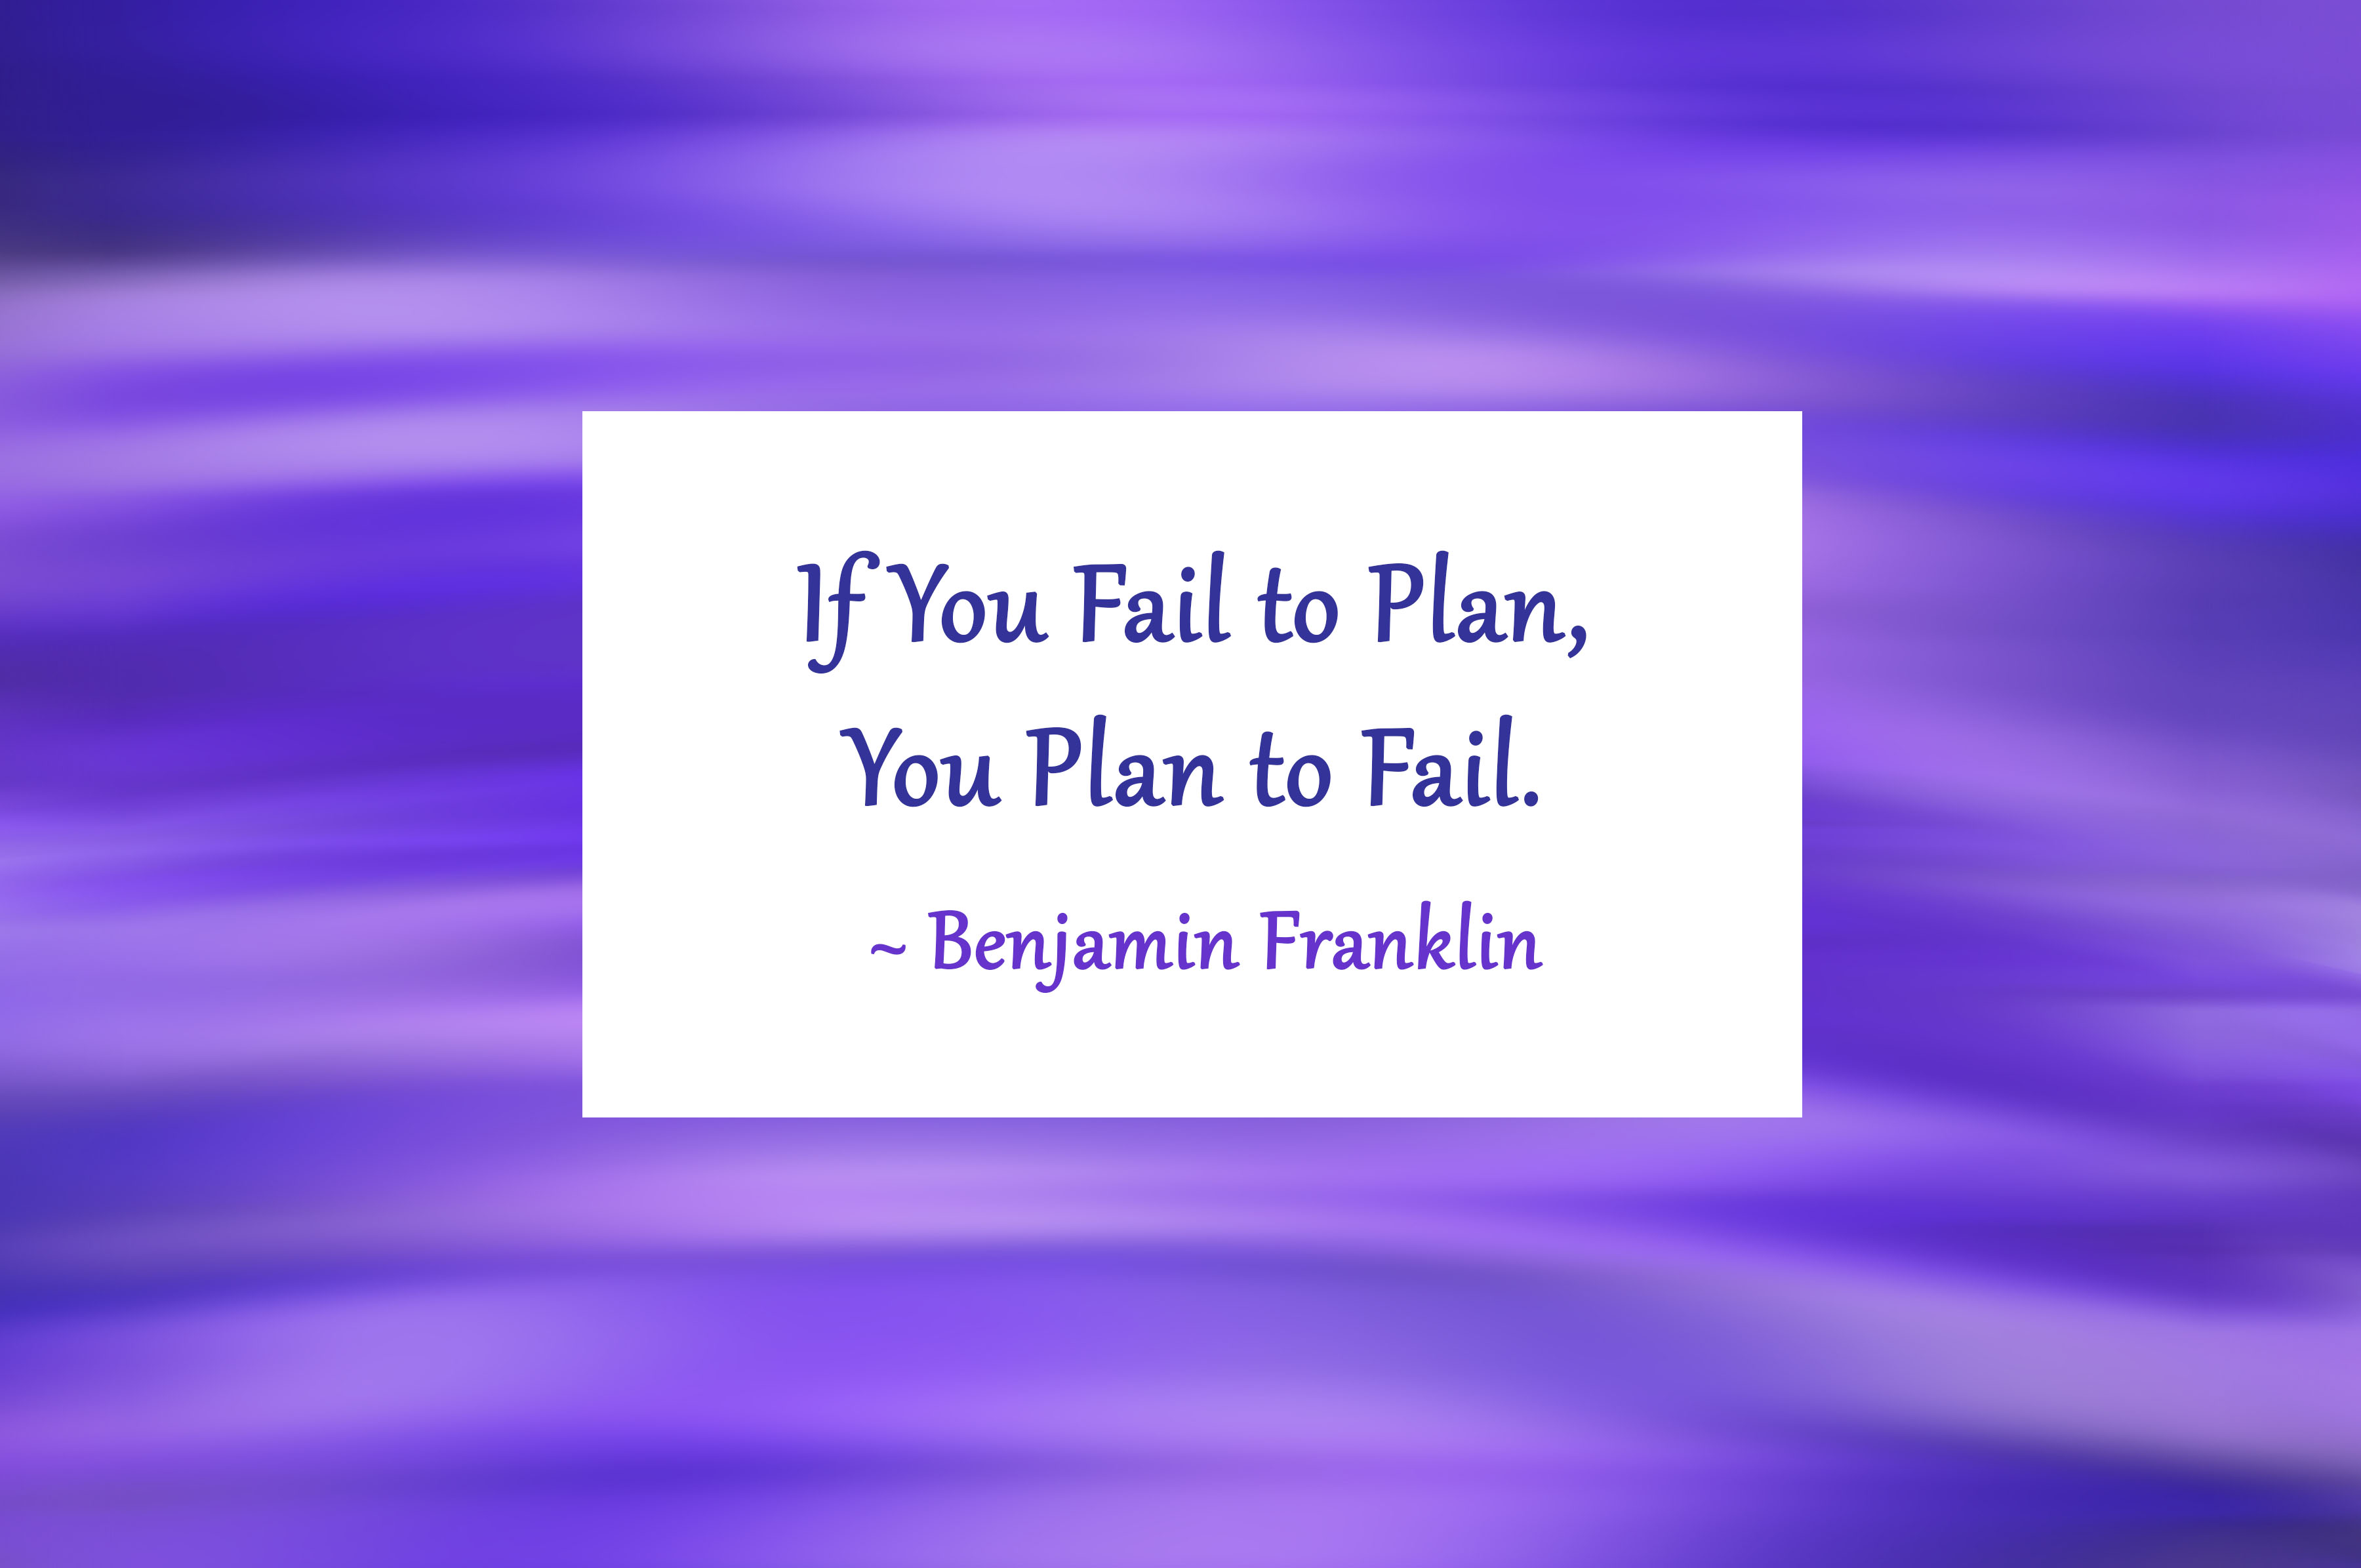 If you fail to plan, you plan to fail - Benjamin Franklin